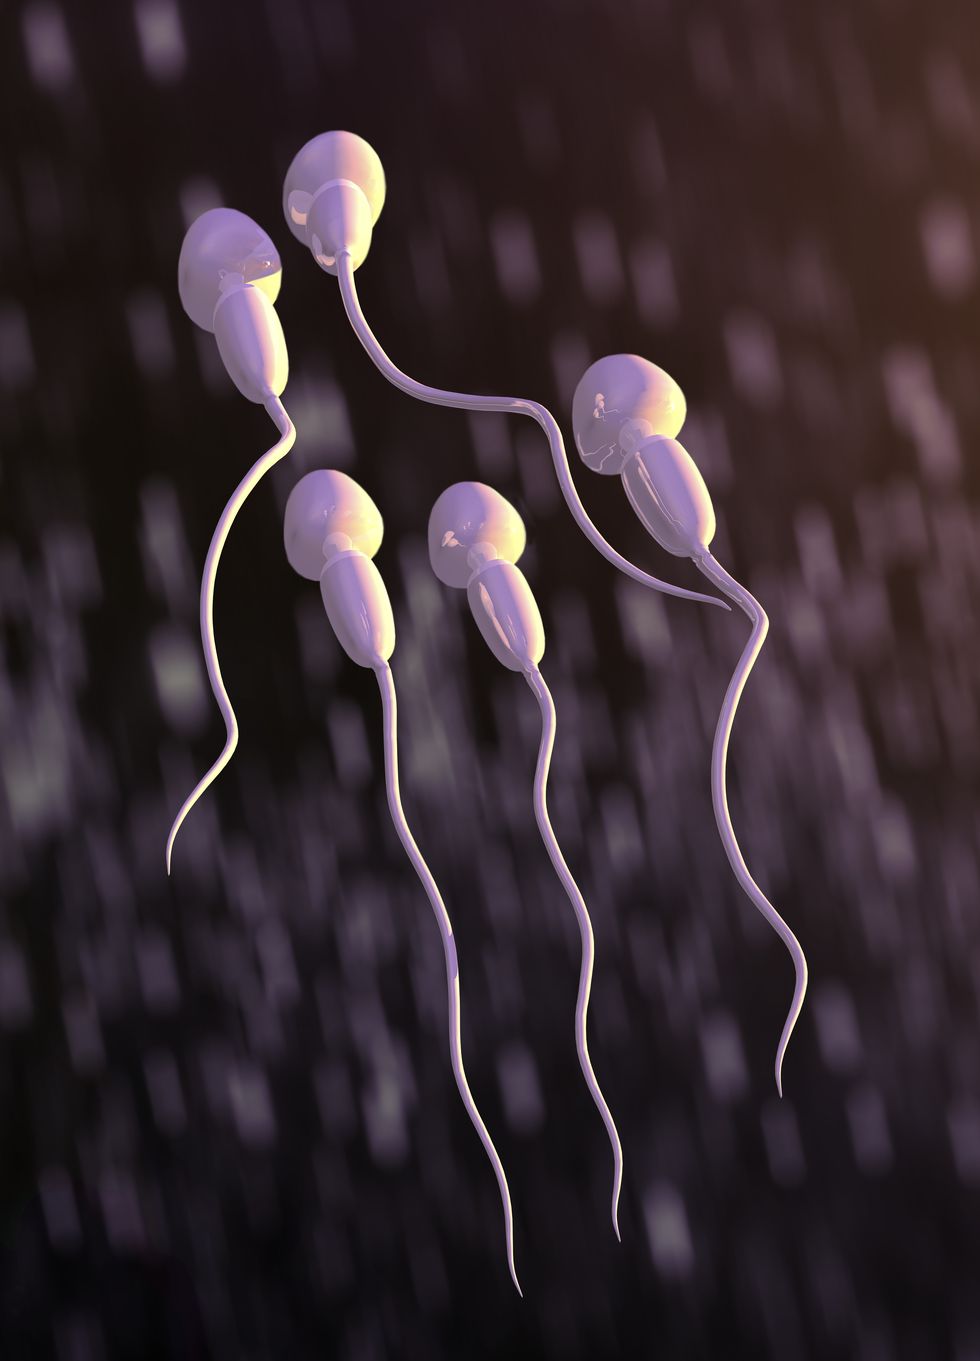 Human sperm, illustration